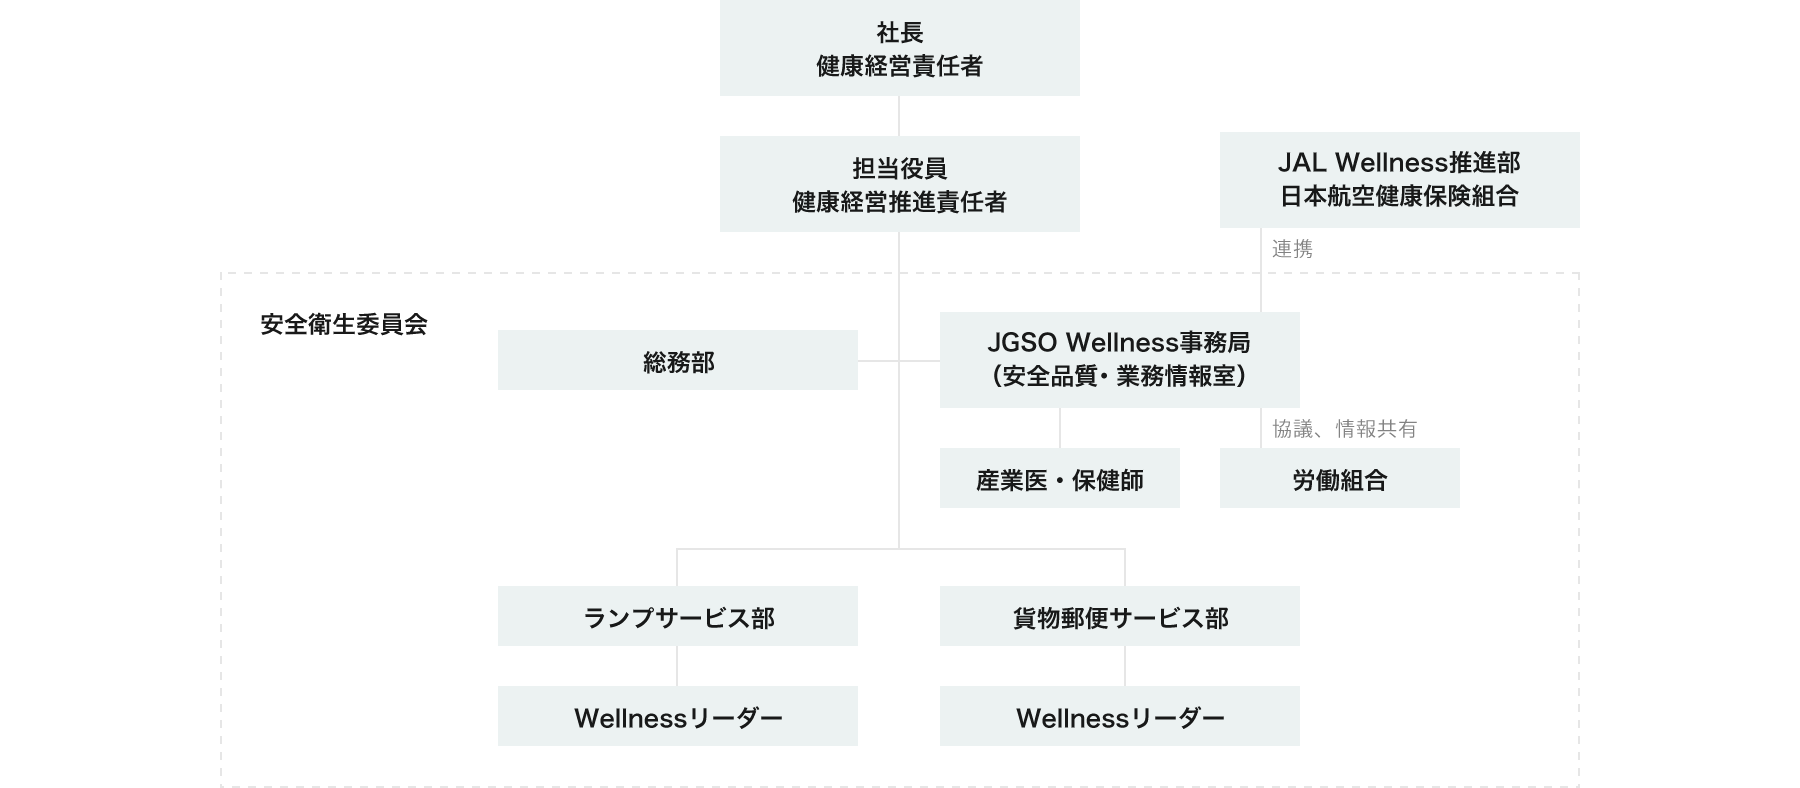 JALグランドサービス大阪の健康経営推進体制